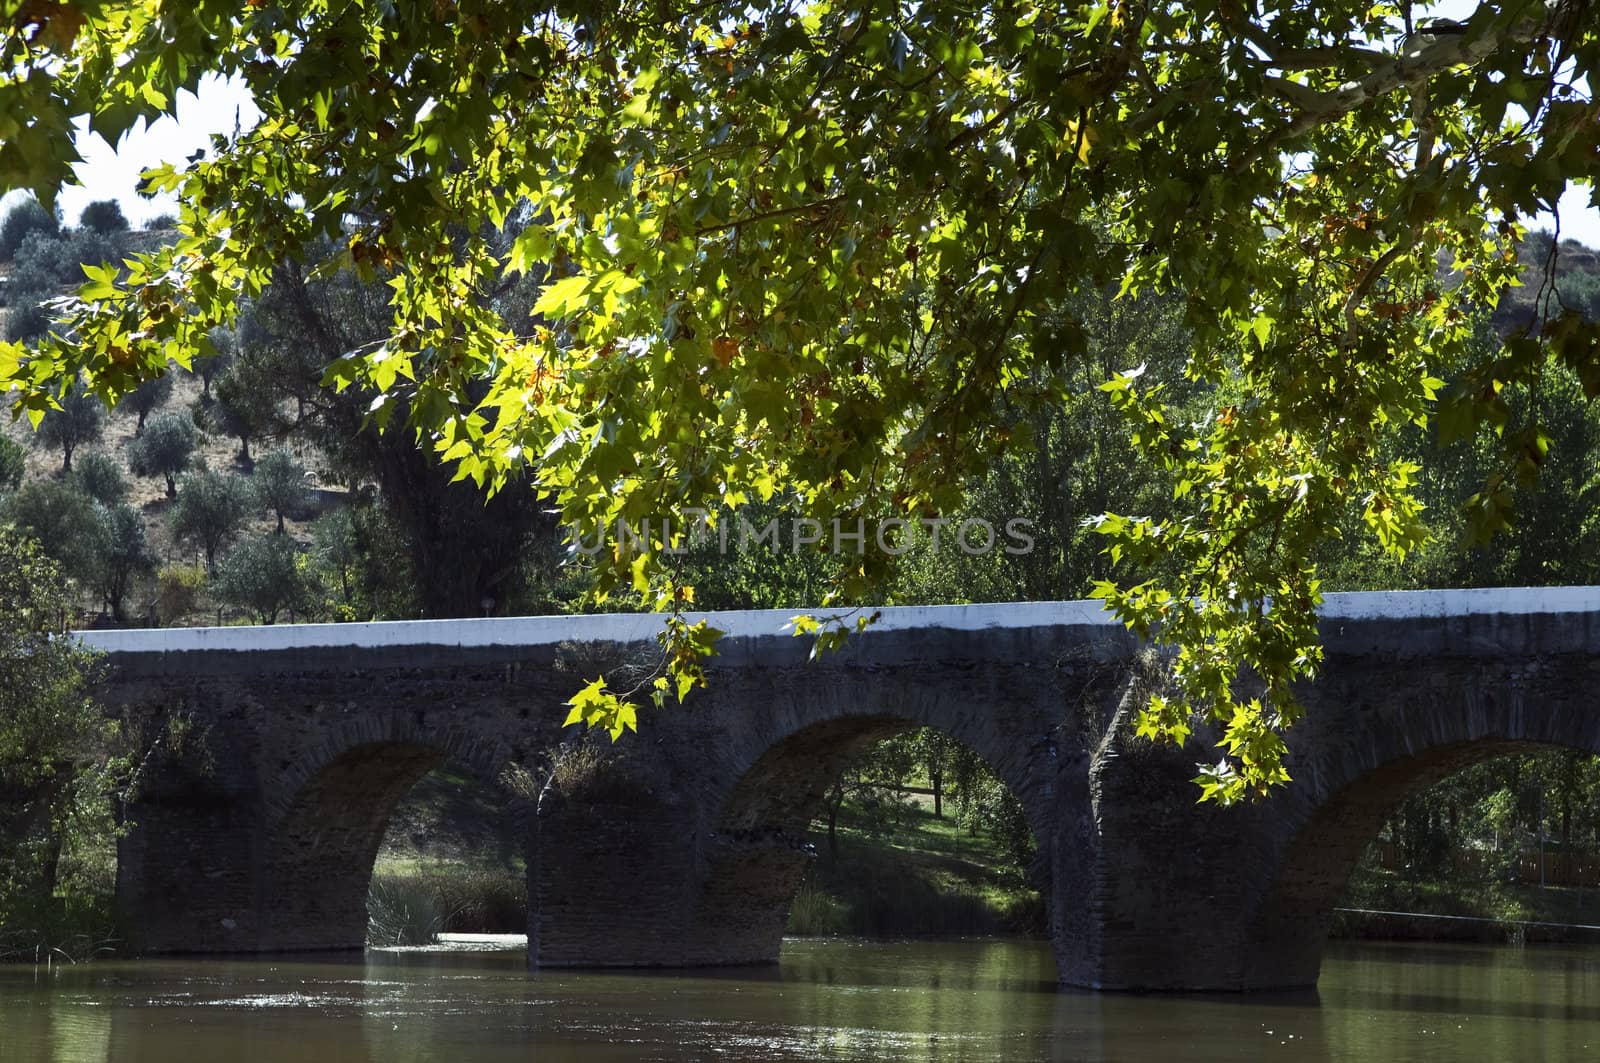 Old stone bridge in a peaceful park
